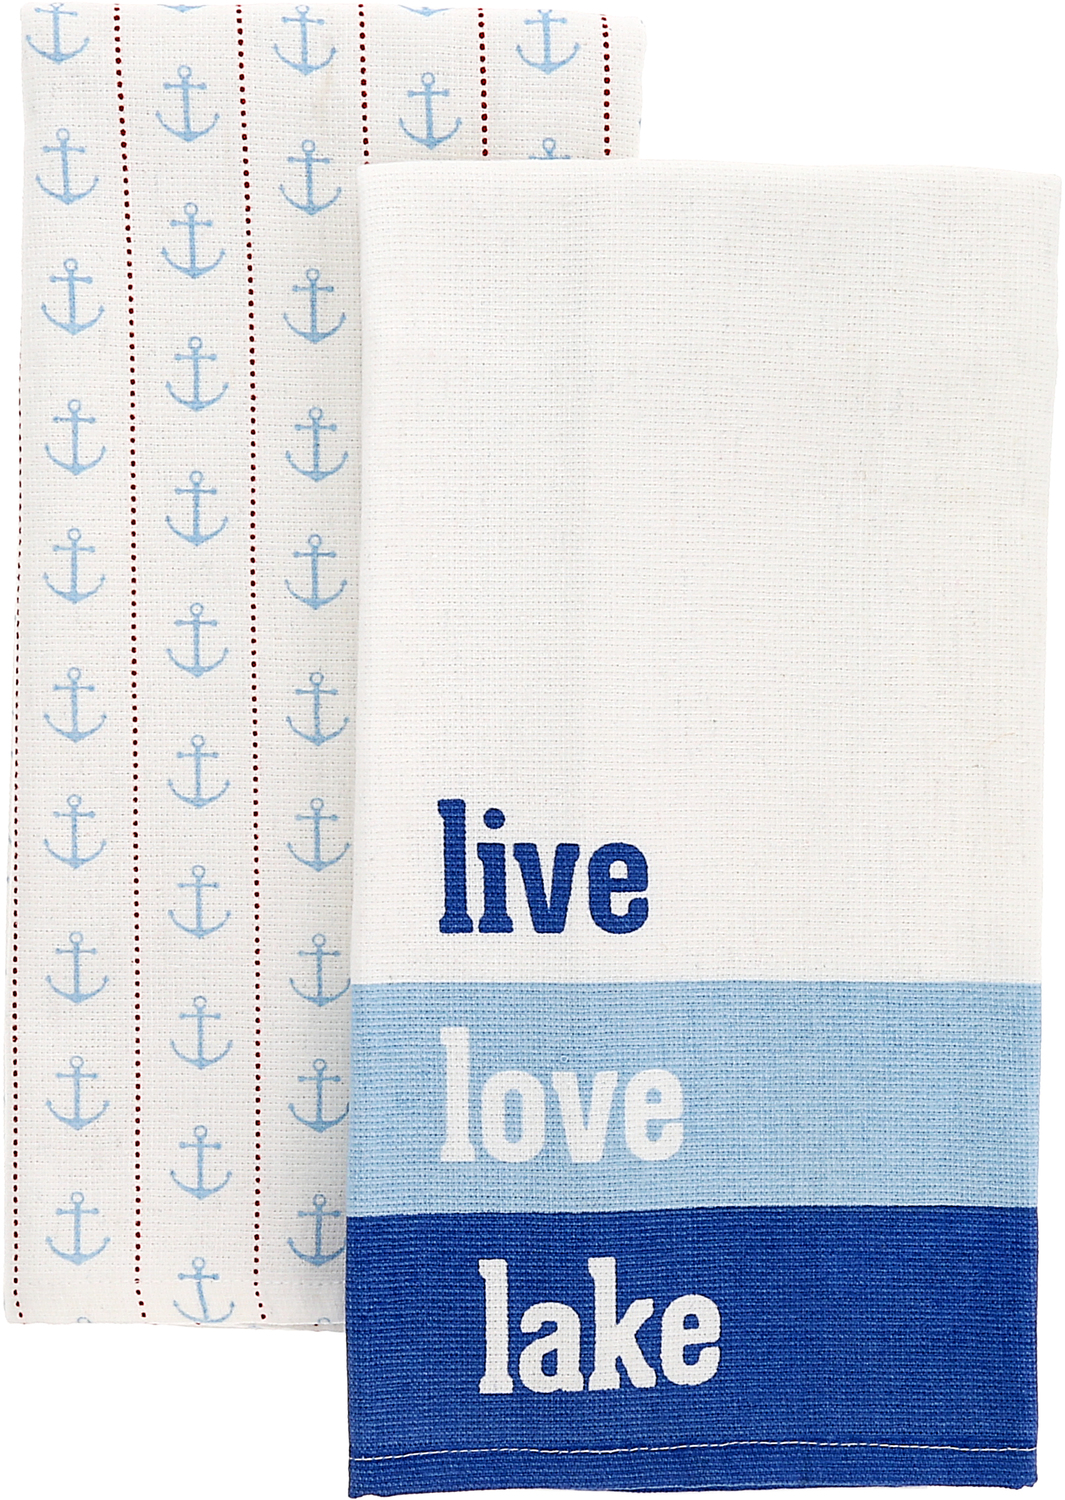 Live Love Lake by We People - Live Love Lake - Tea Towel Gift Set
(2 - 20" x 28")